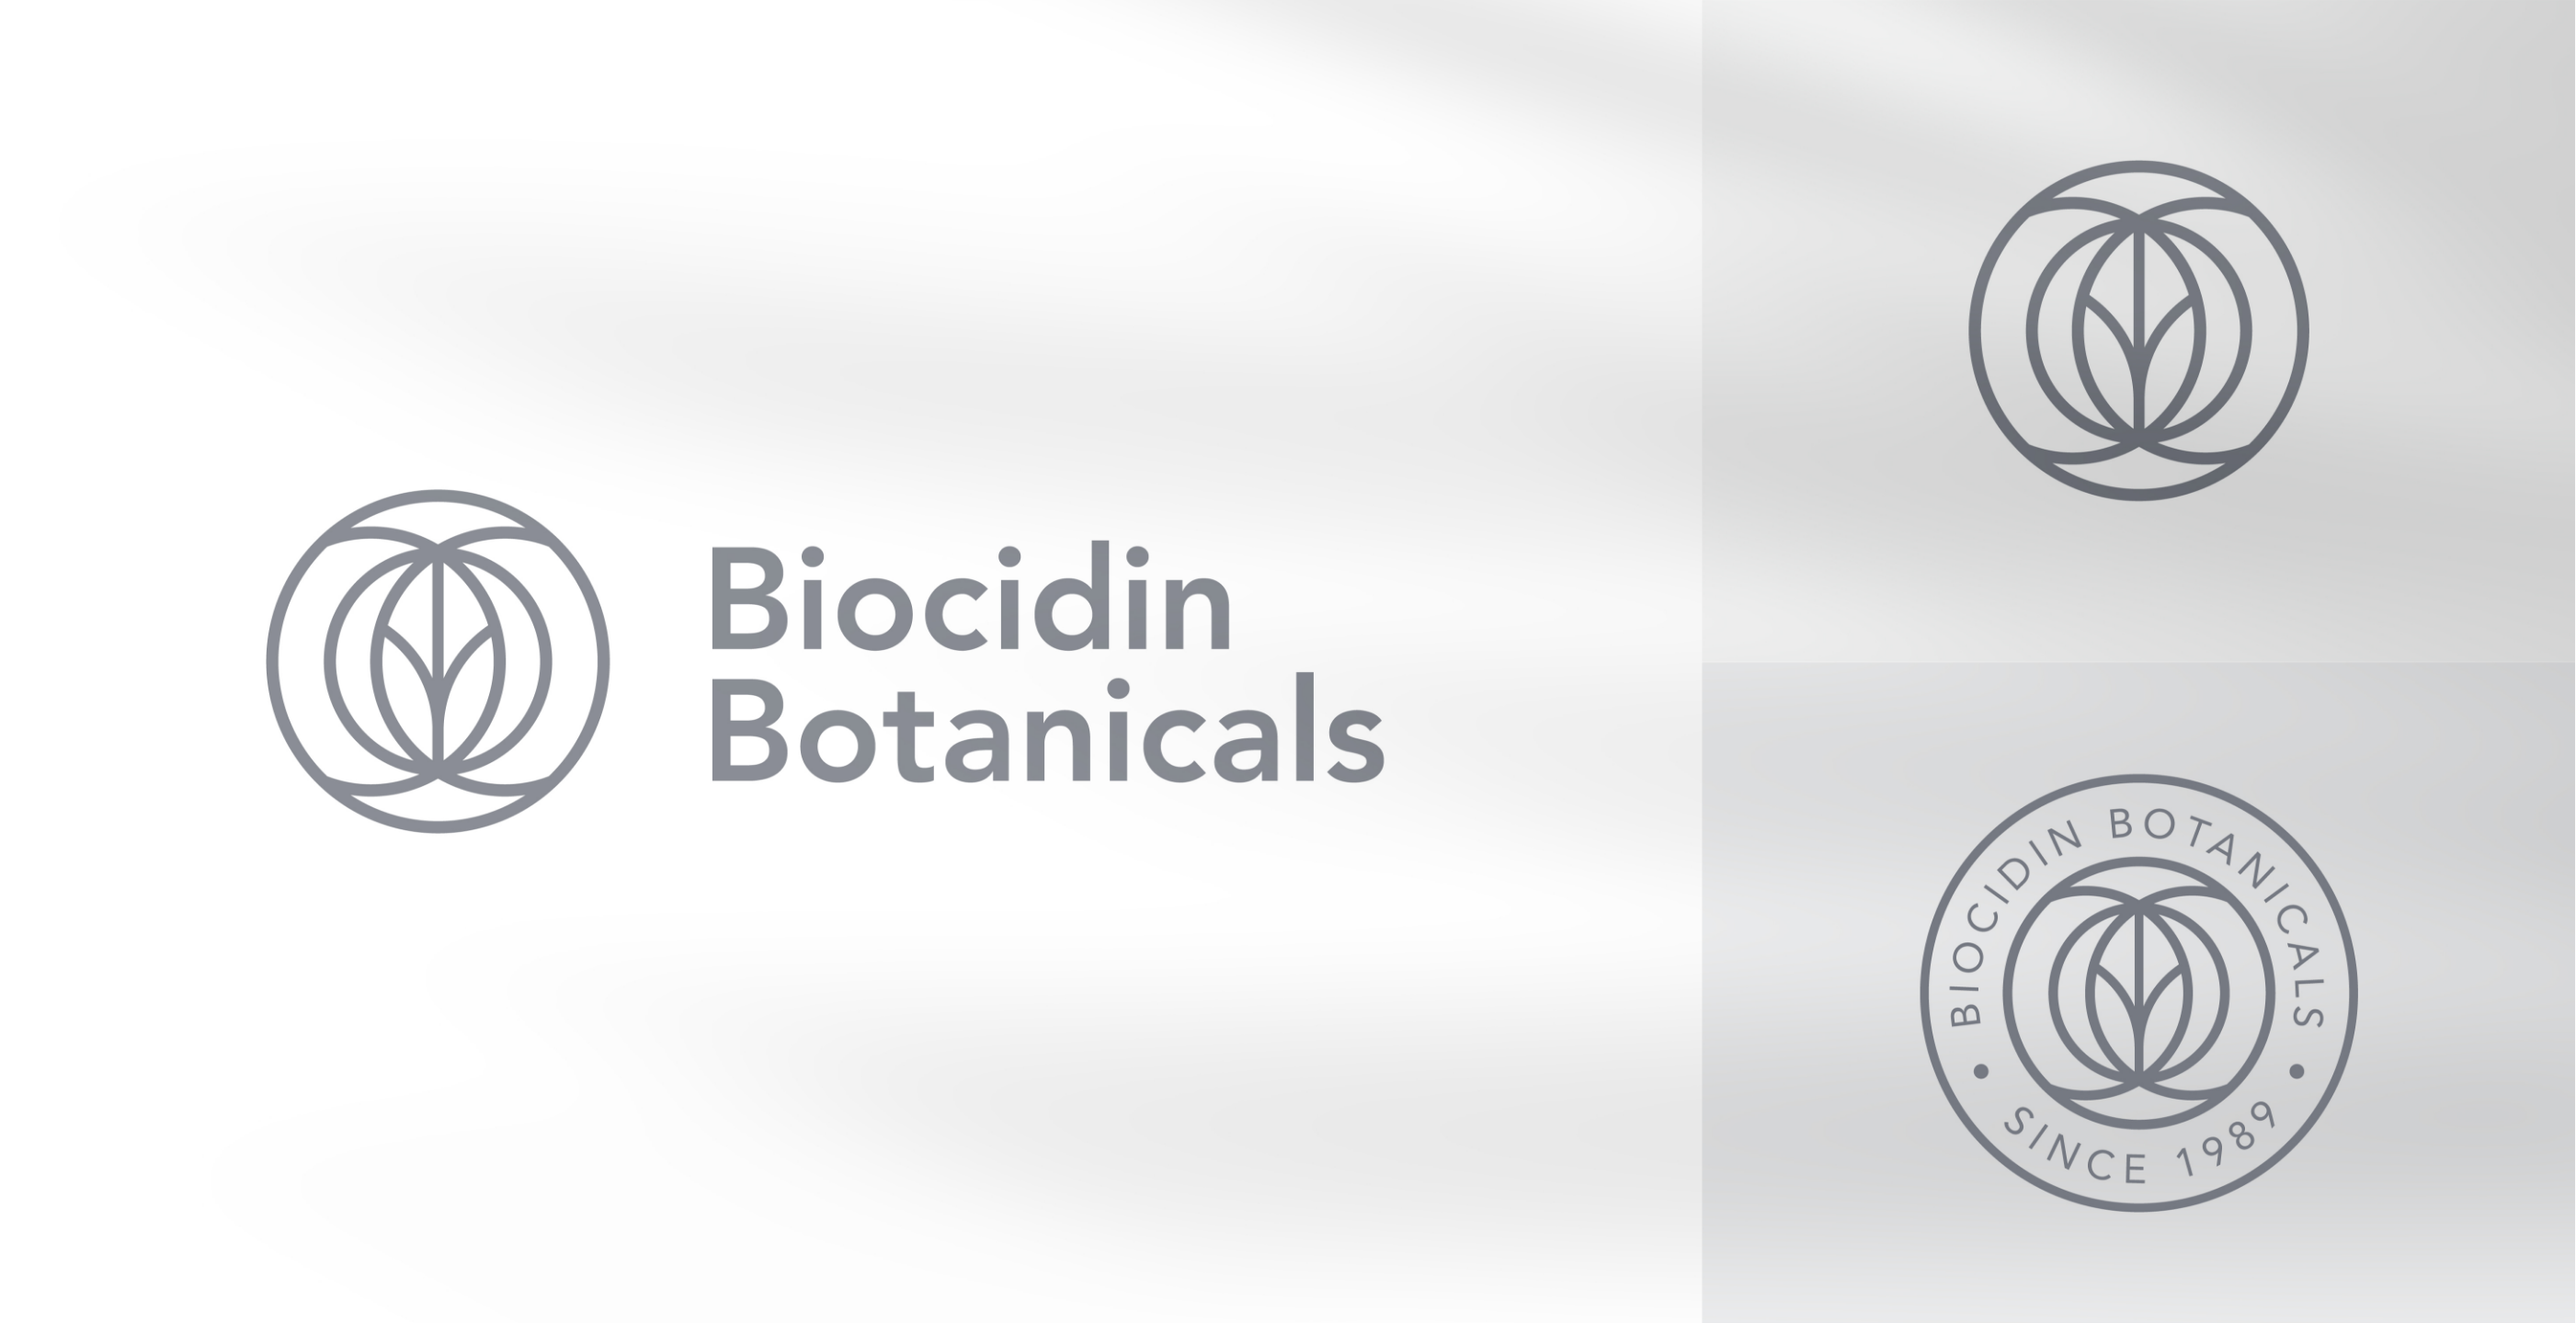 Biocidin_Botanicals_Logos